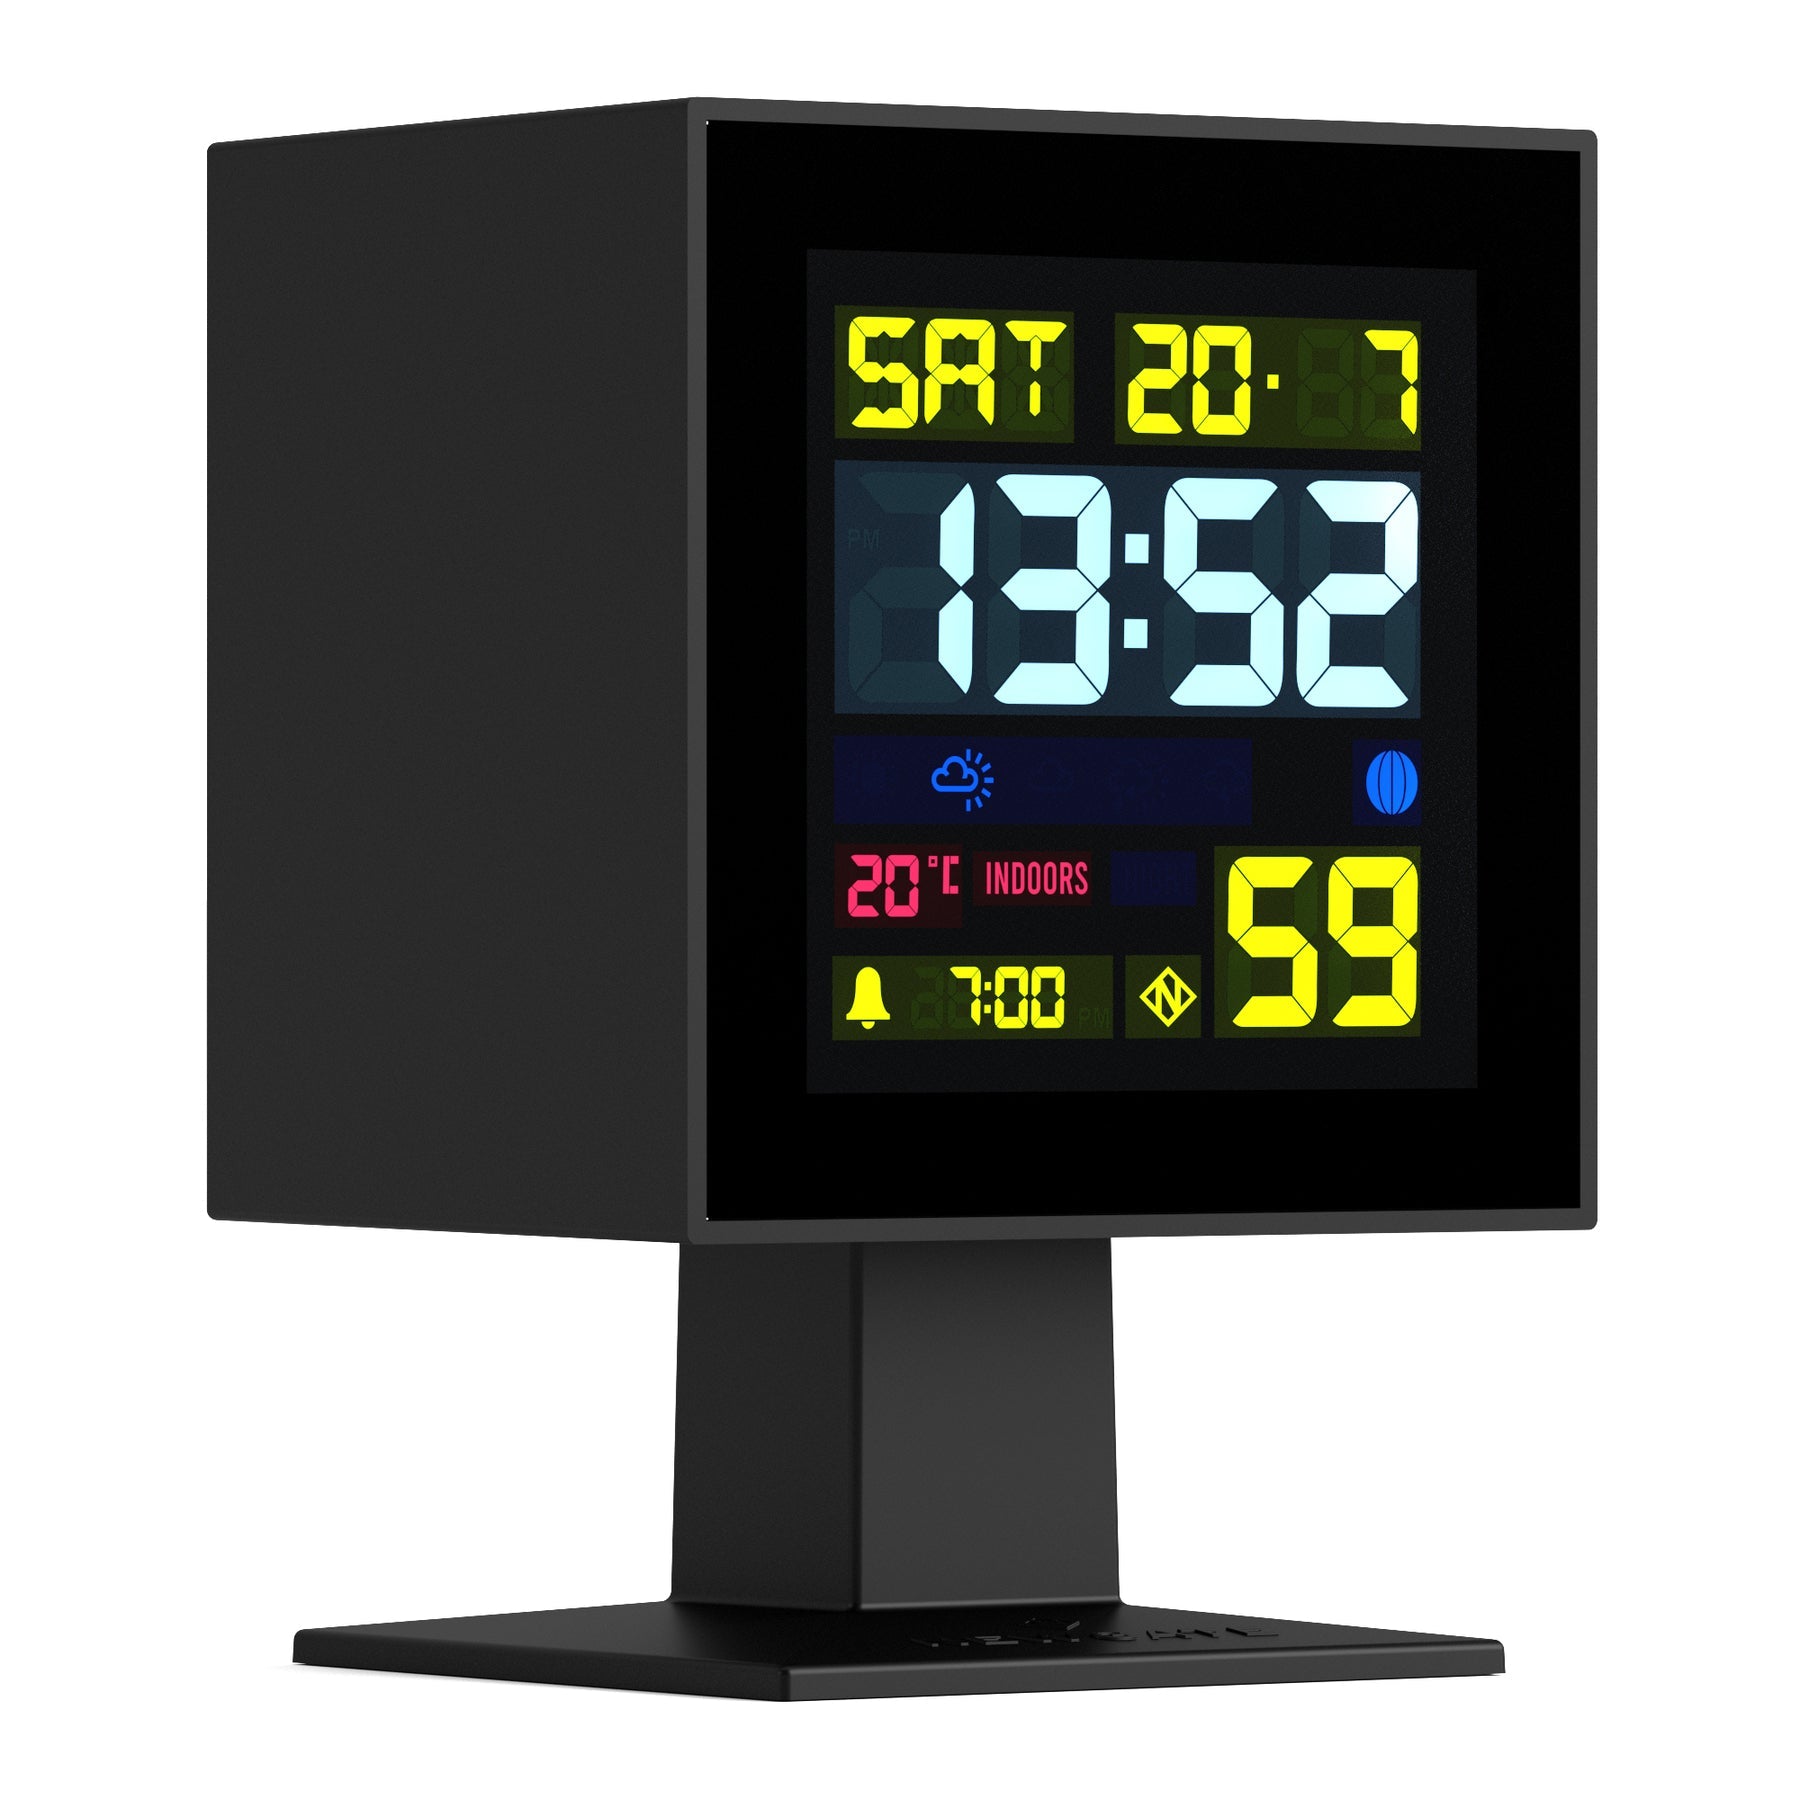 Newgate Monolith Lcd Alarm Clock - Black - Notbrand